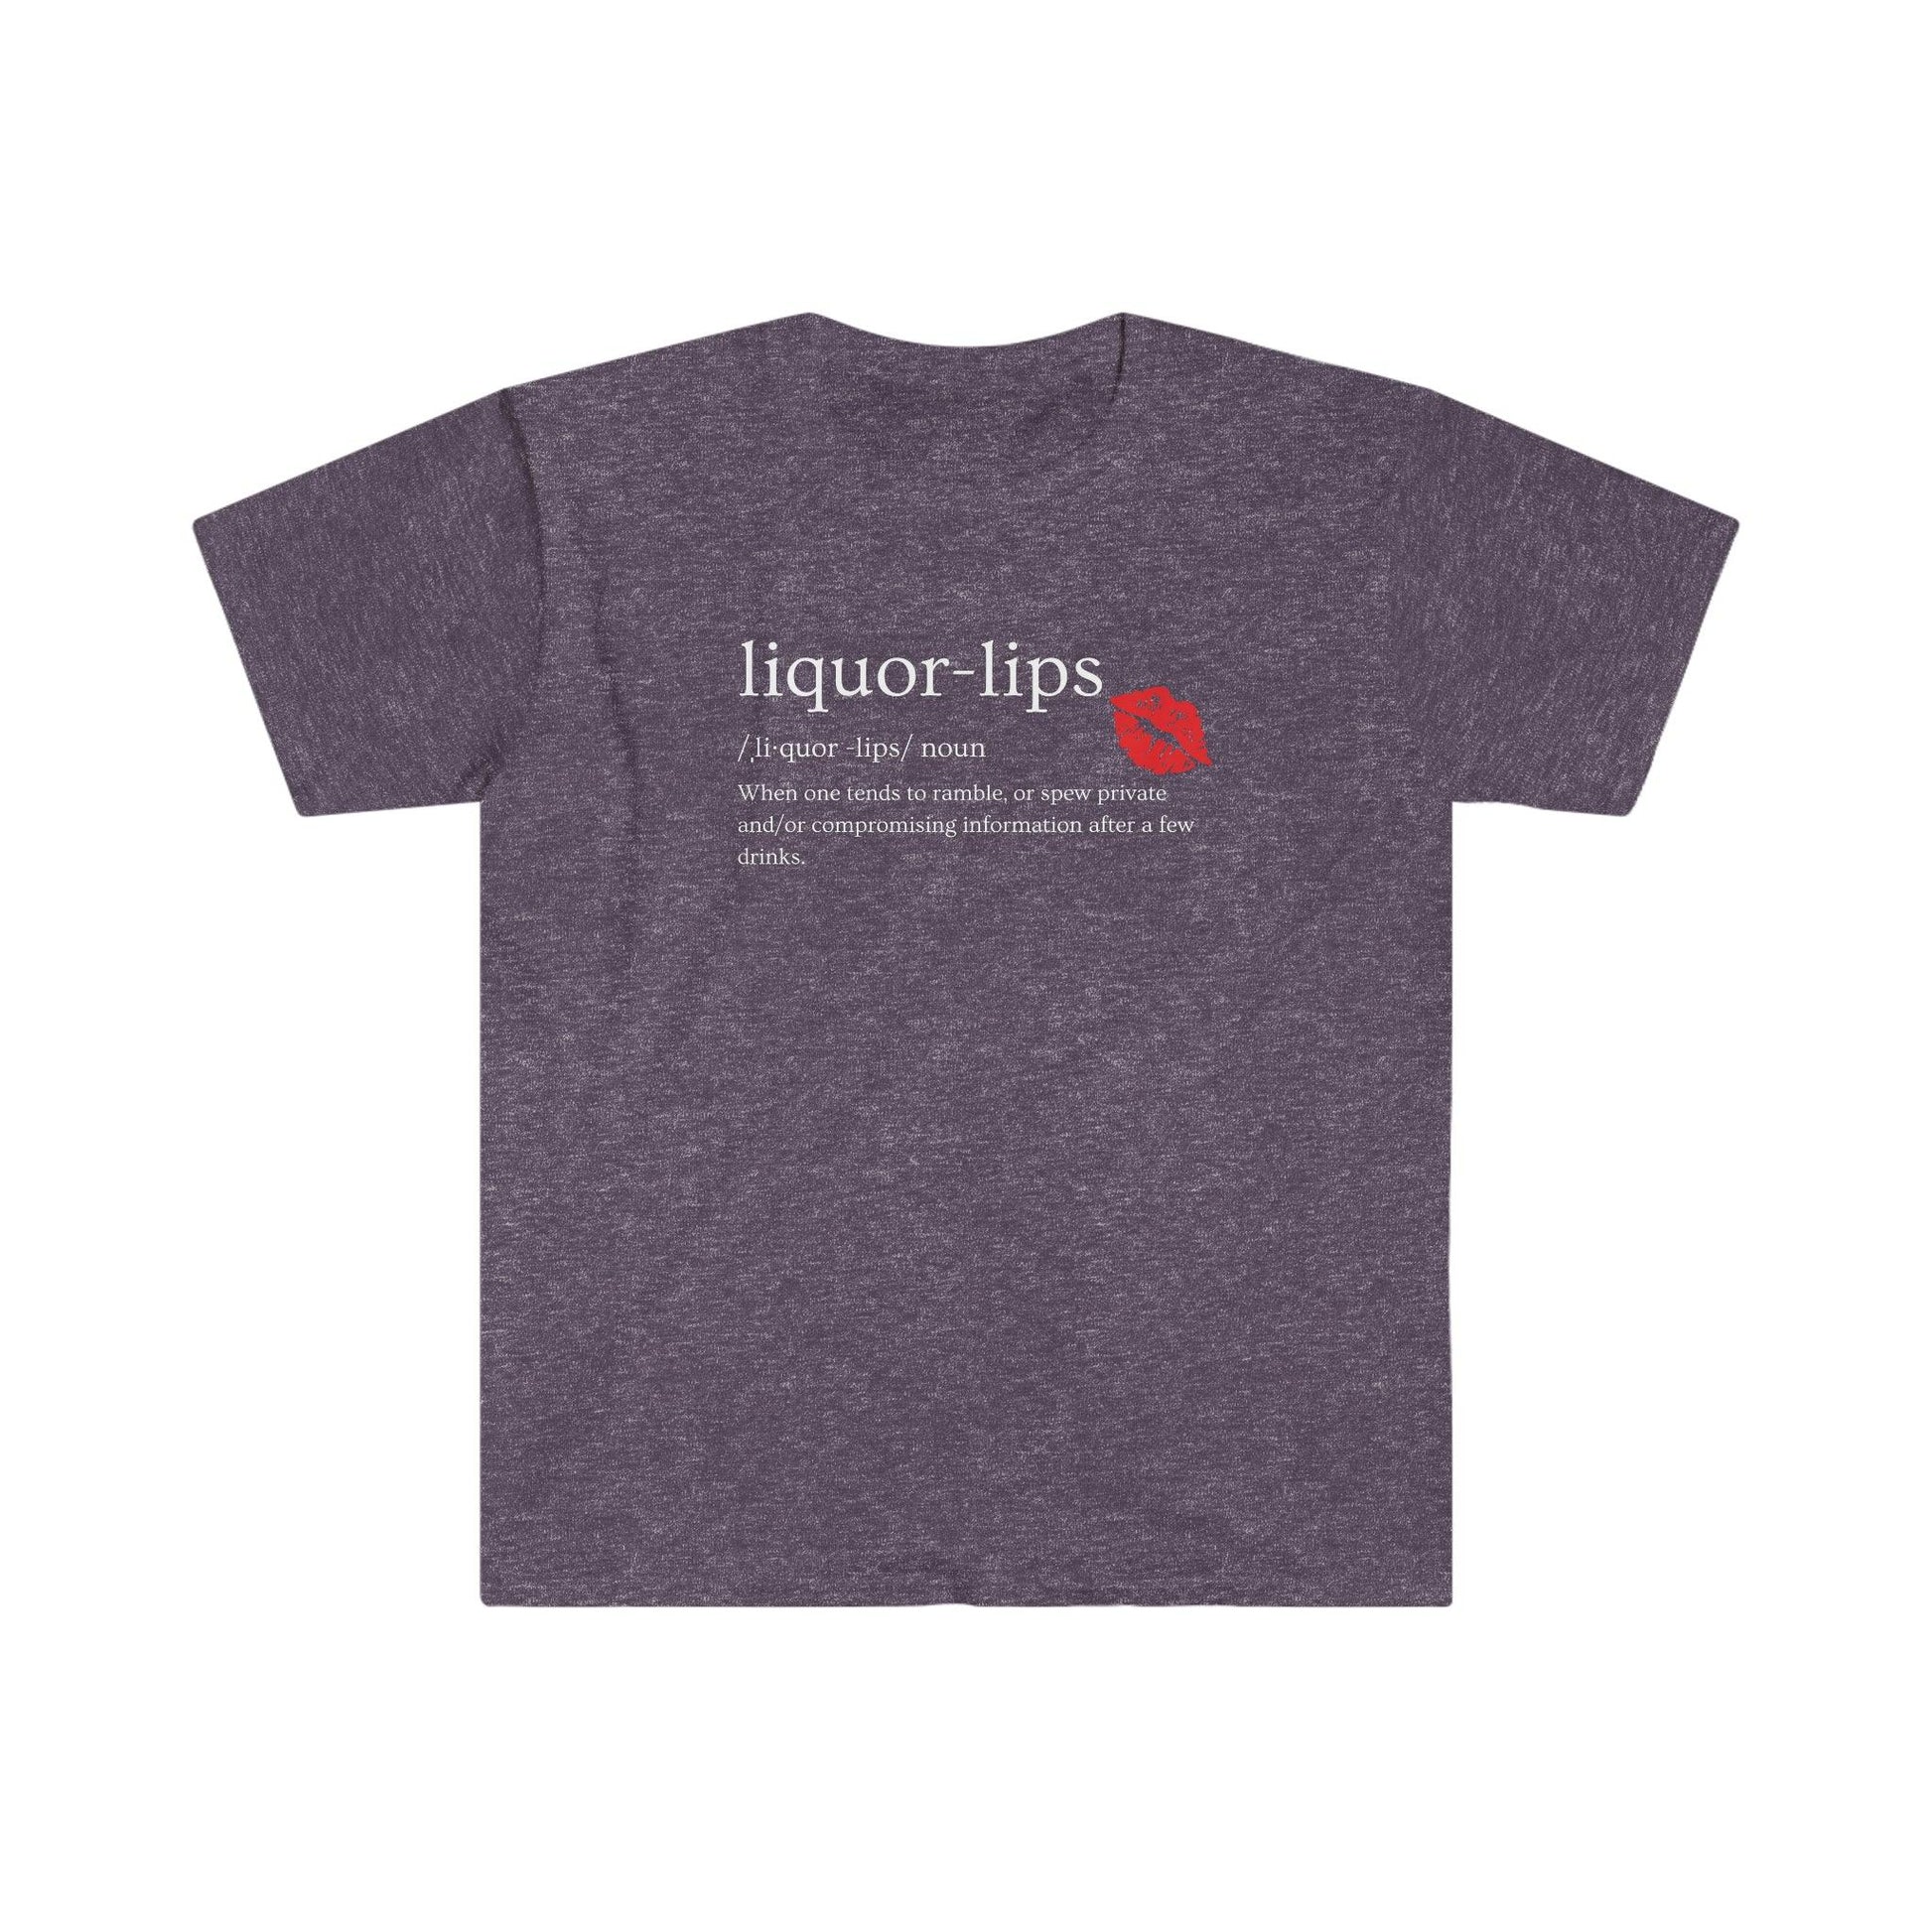 Liquor Lips definition Unisex Soft style T-Shirt, Bachelorette Party Shirt - Lickerlips Lip Balms